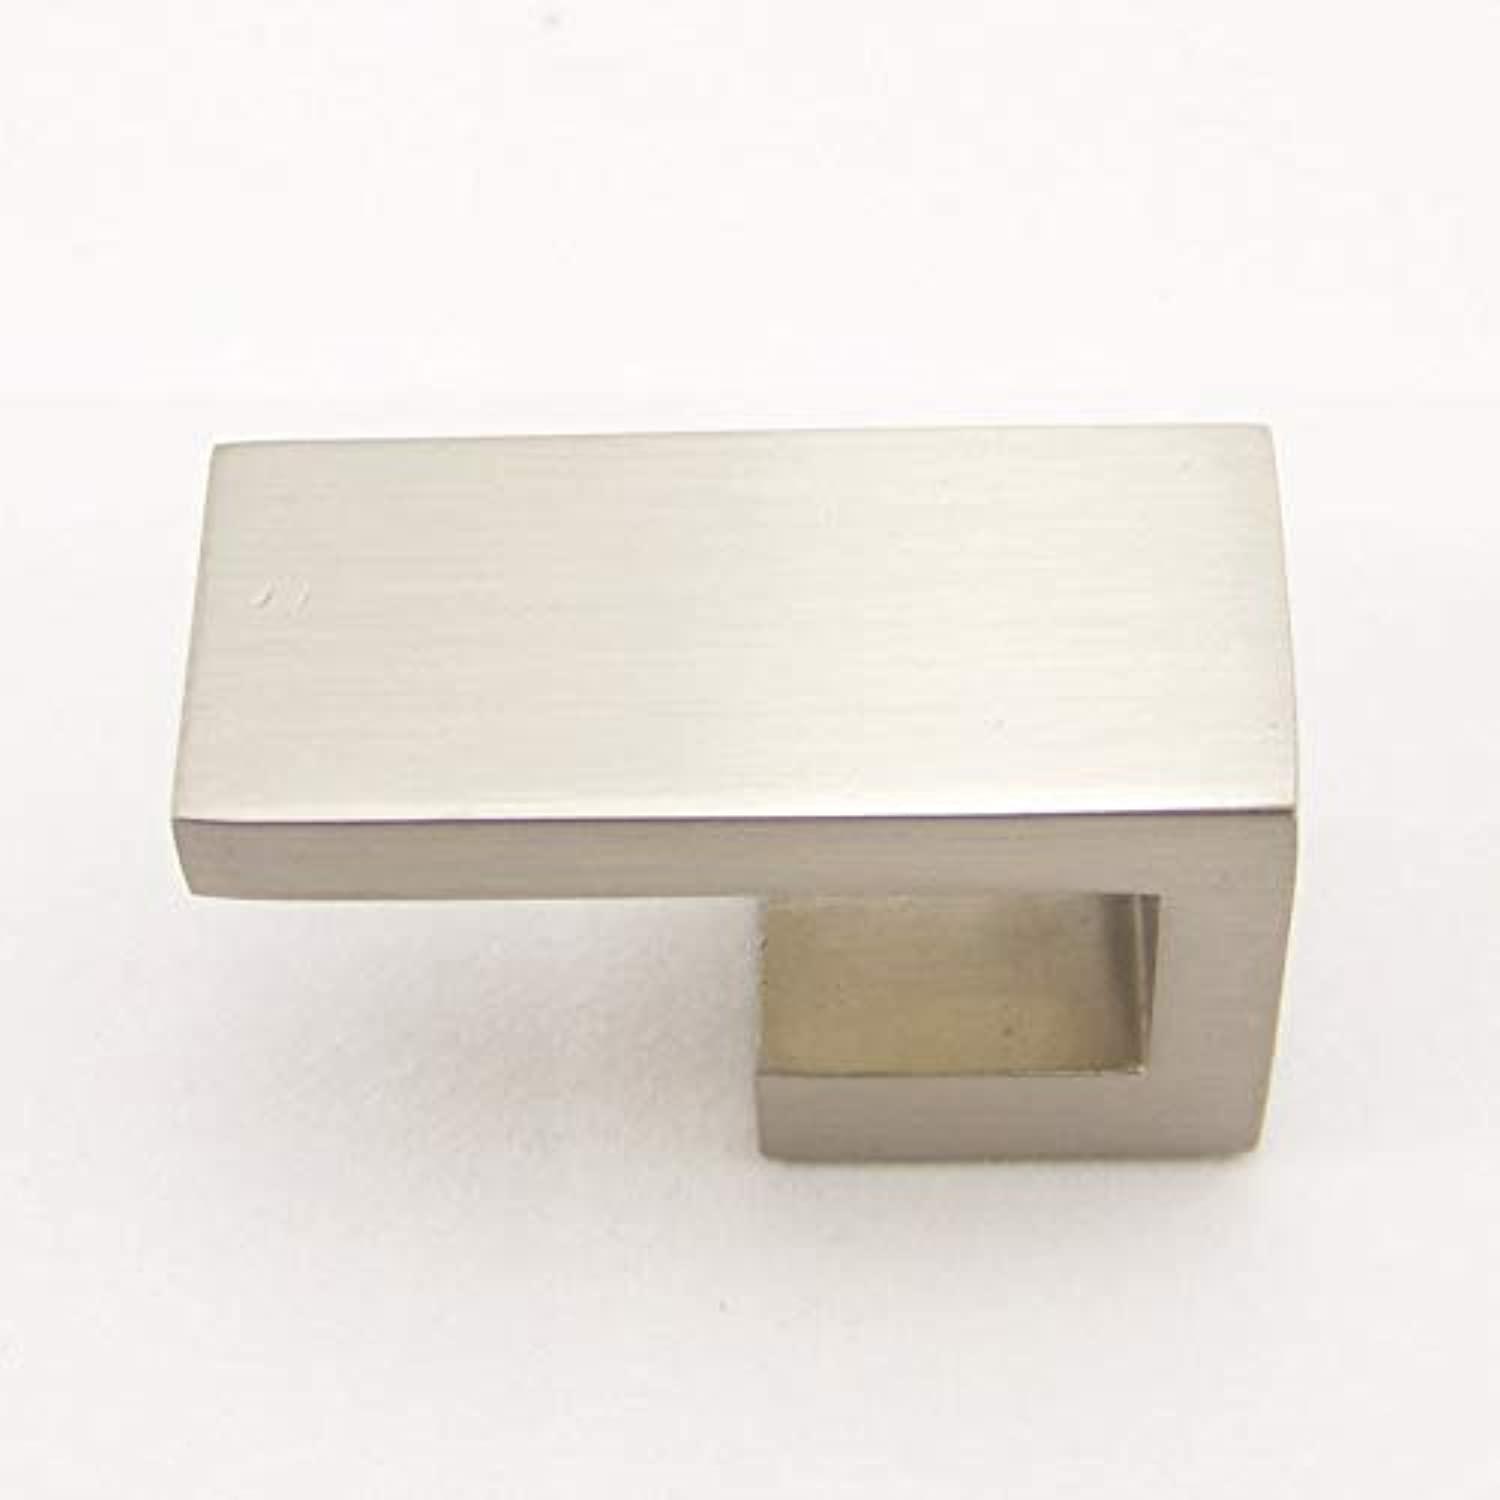 Handlemax Modern Satin Nickel, Contemporary Cabinet Pulls Brushed Nickel